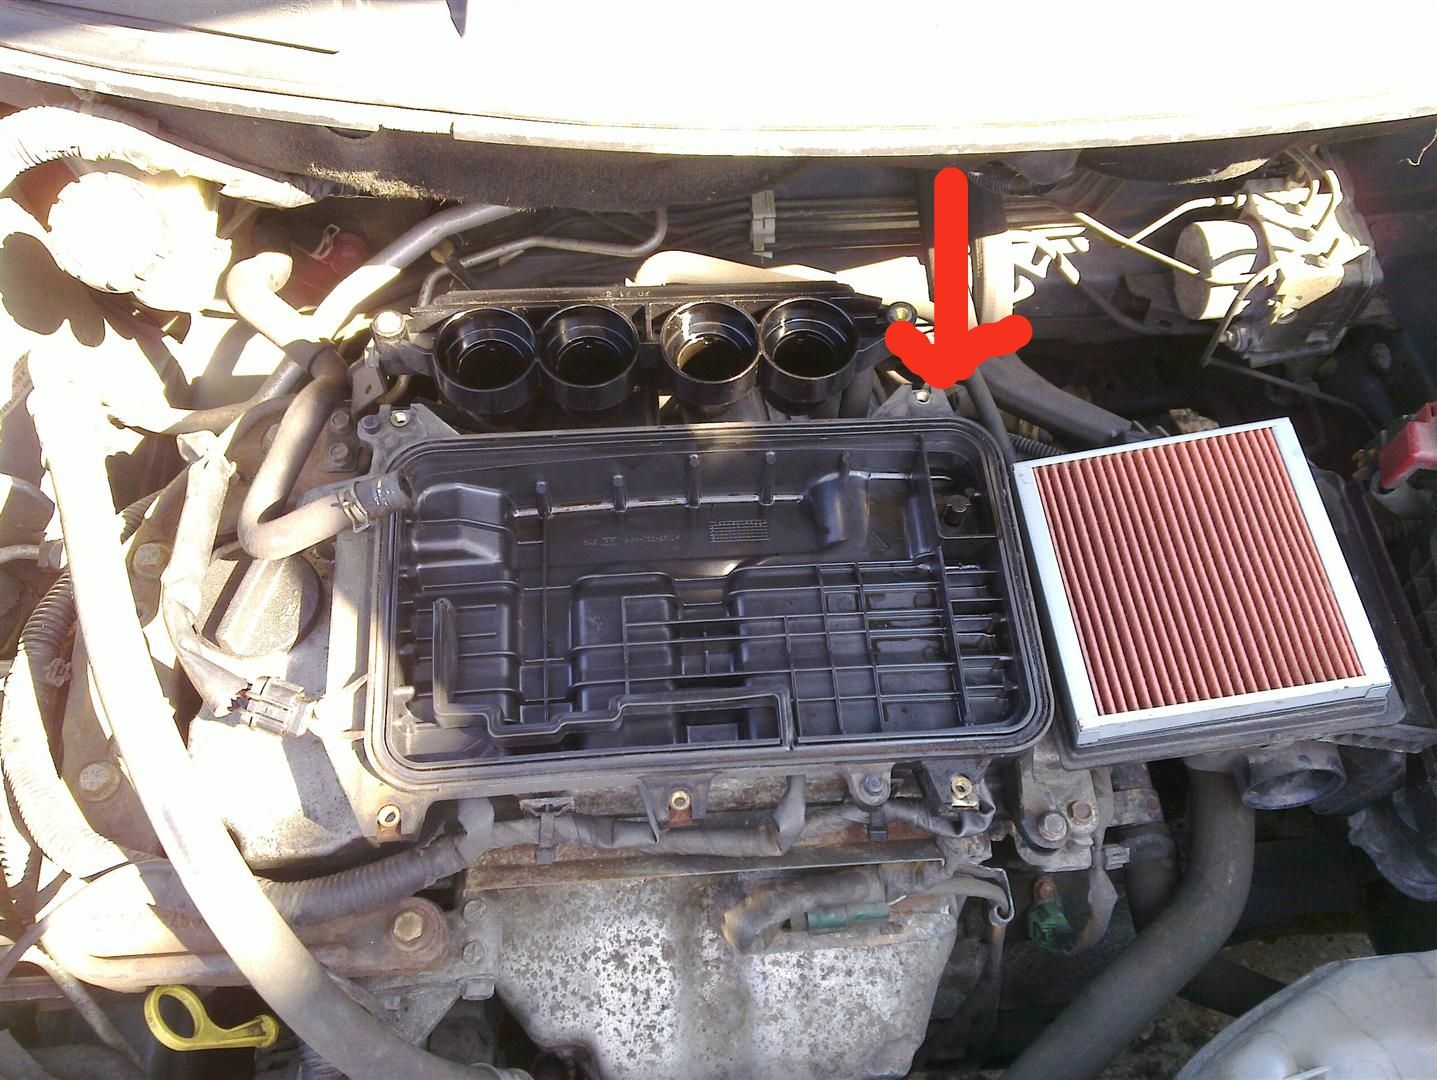 Nissan micra starter motor not working #3